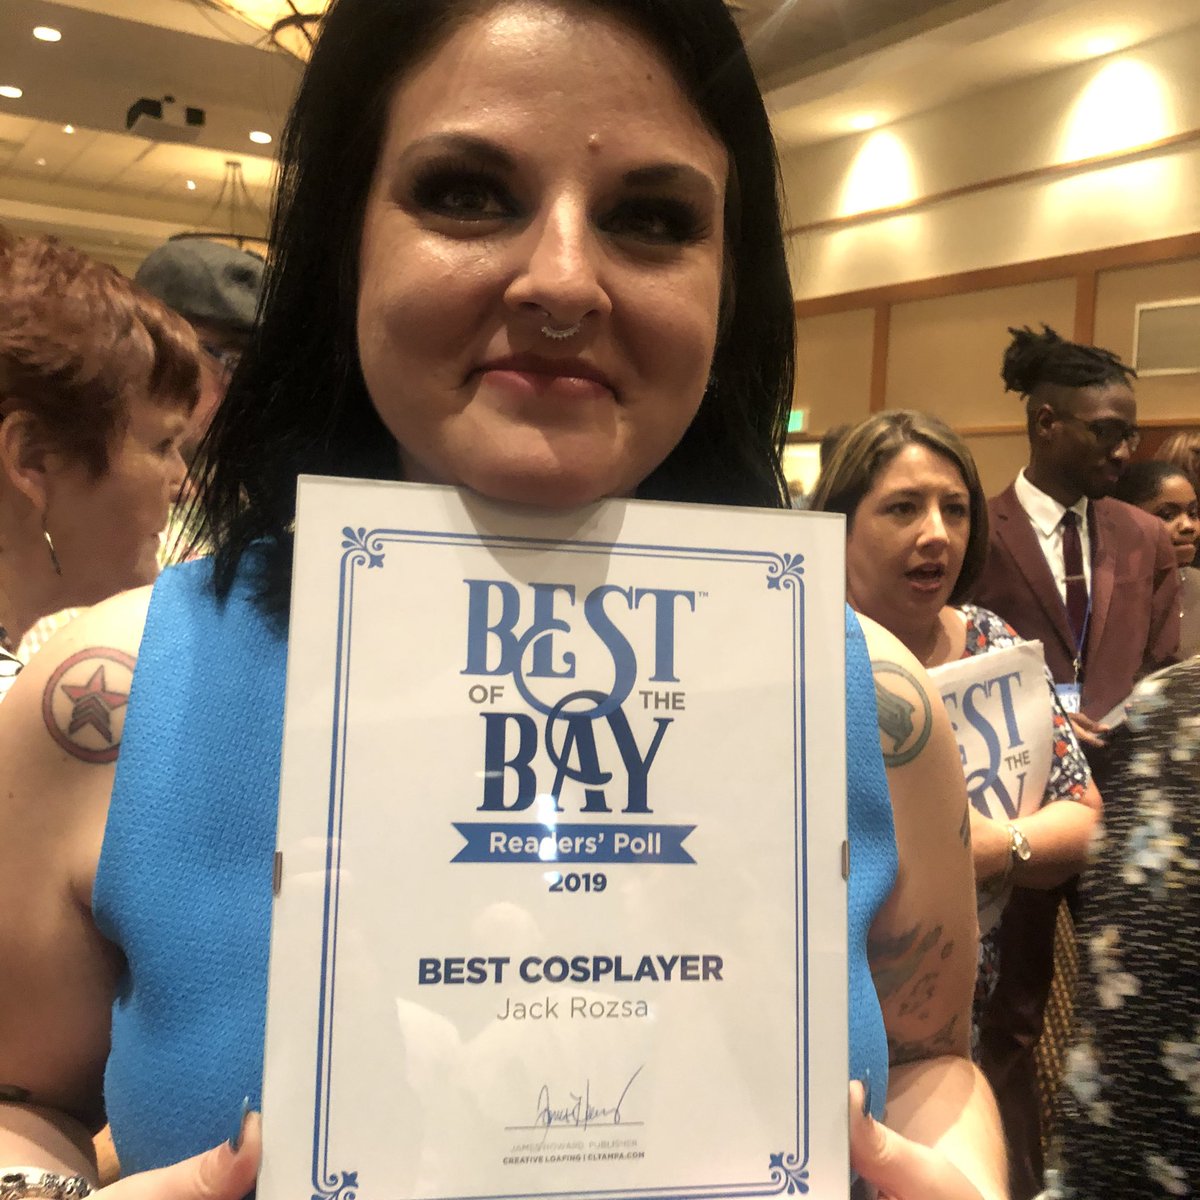 I WON BEST COSPLAYER in the Best of the Bay awards!! #bestofthebay #botb #bestcosplayer #readerspoll #over30cosplay #plussizedcosplayer